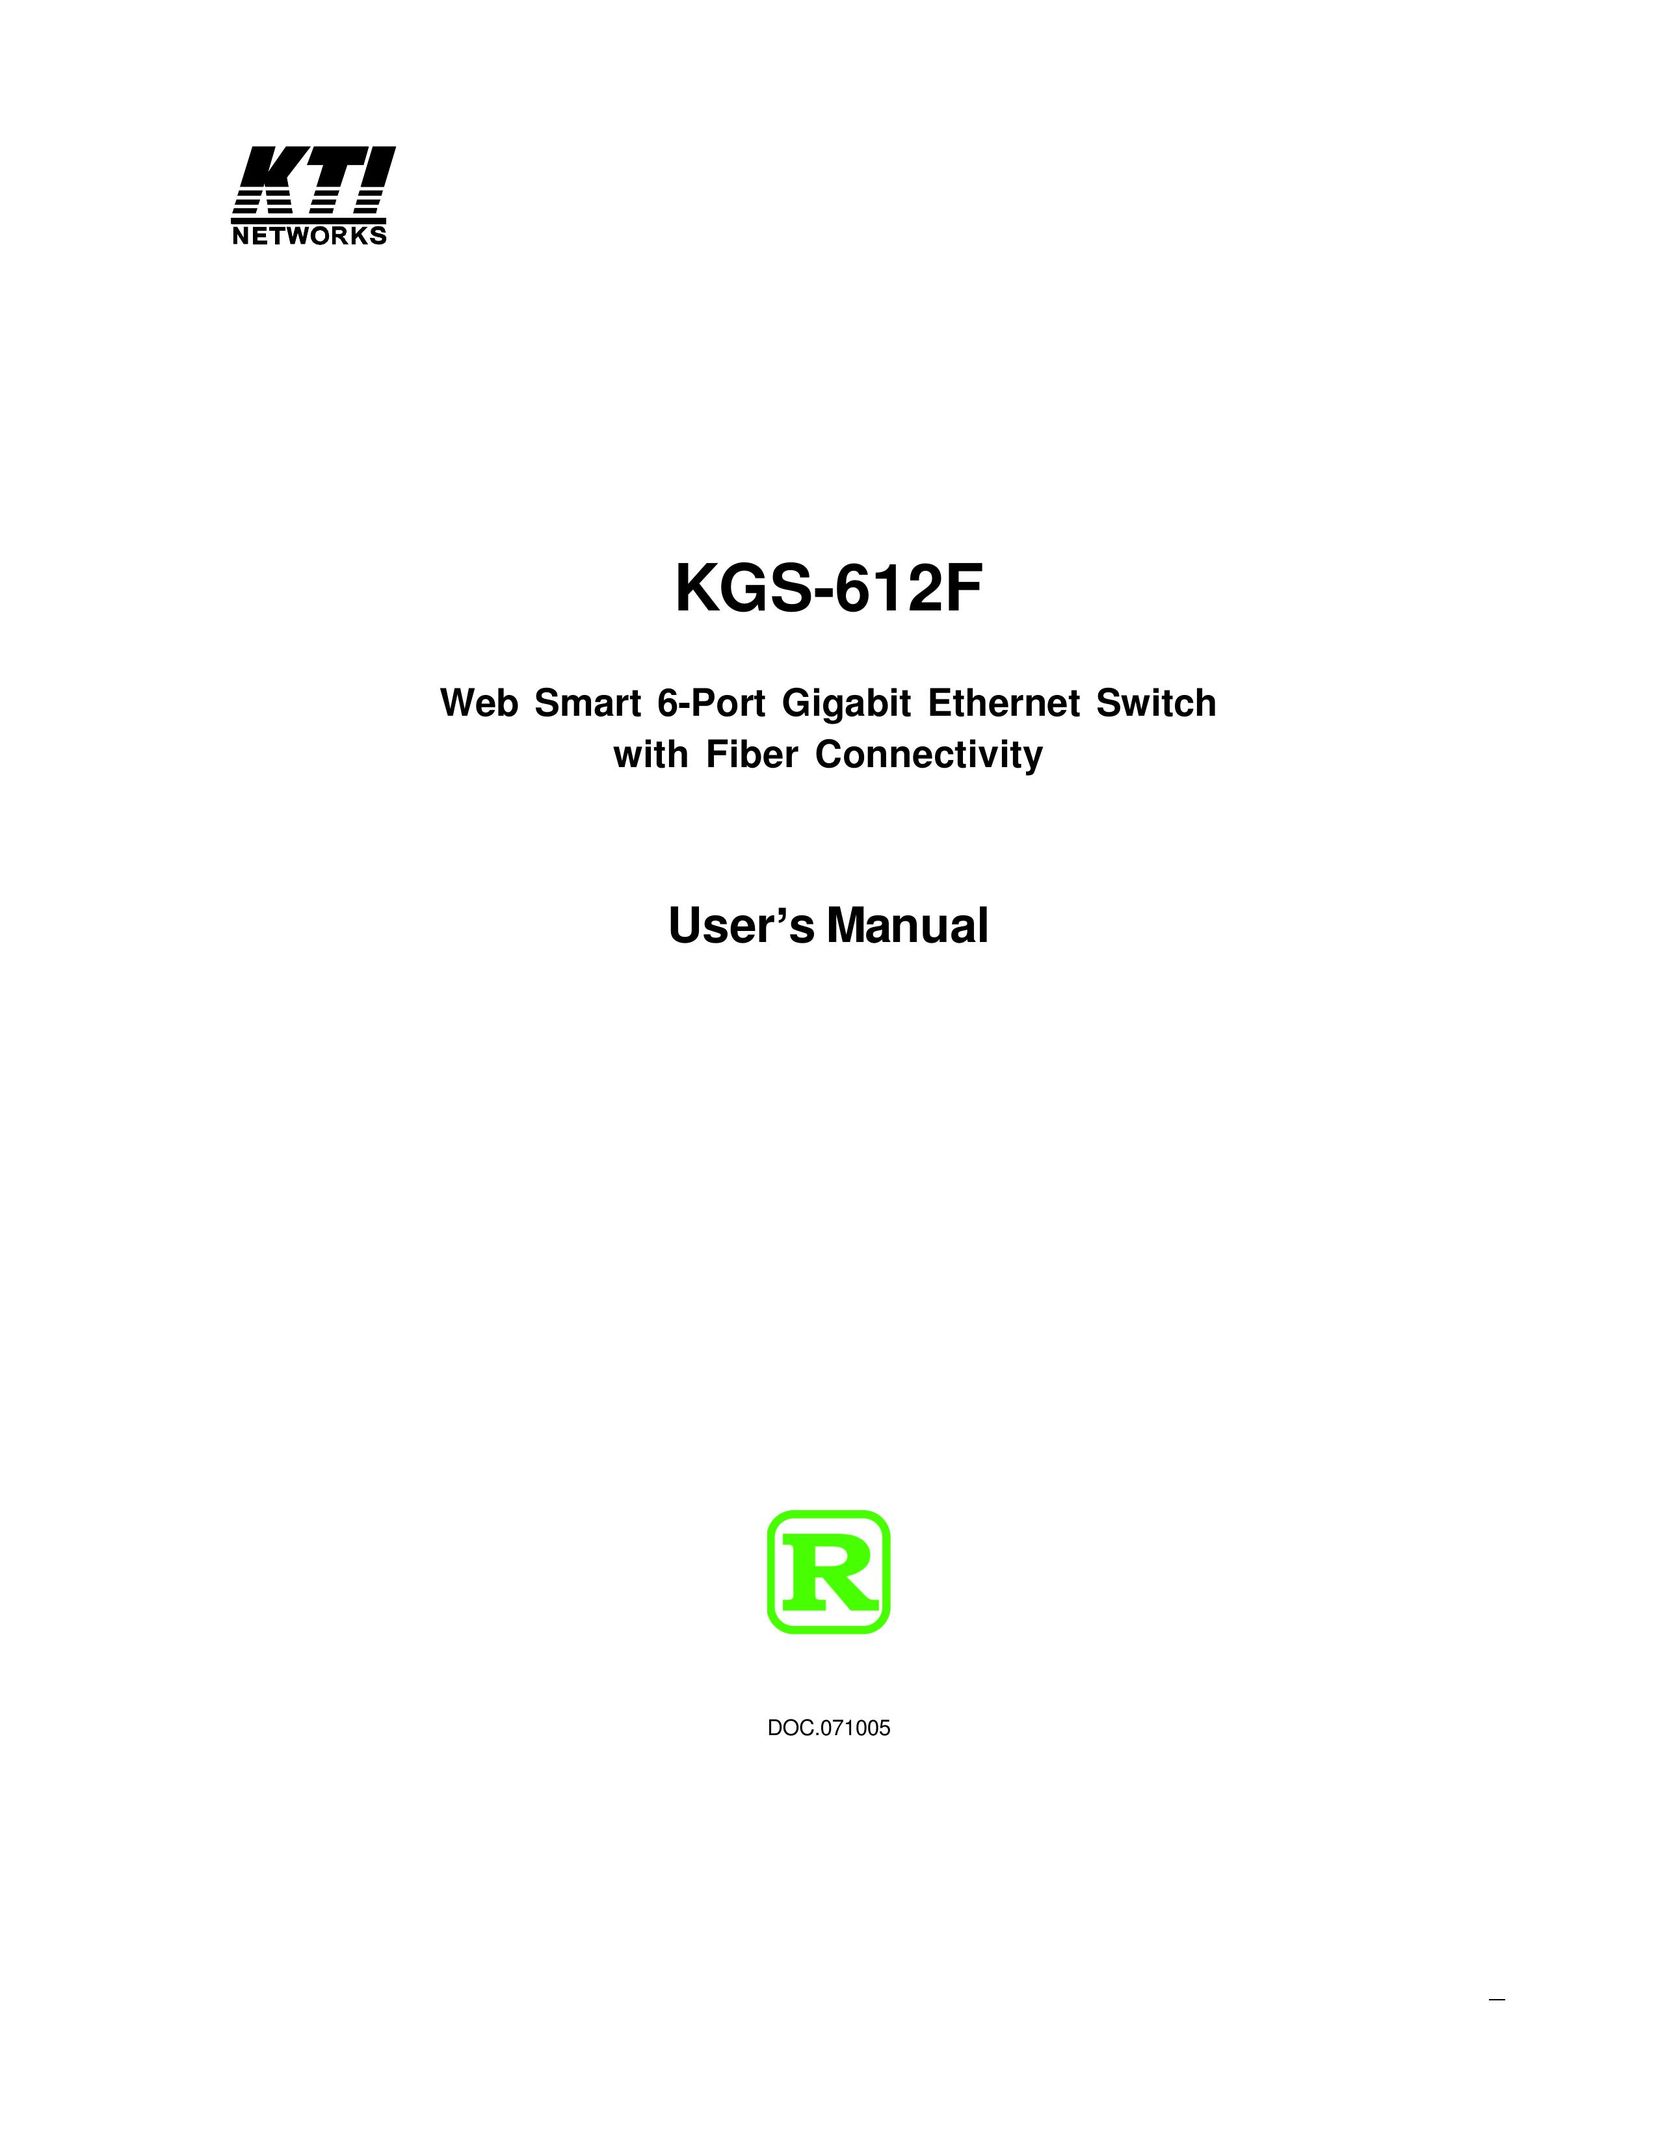 KTI Networks KGS-612F Switch User Manual